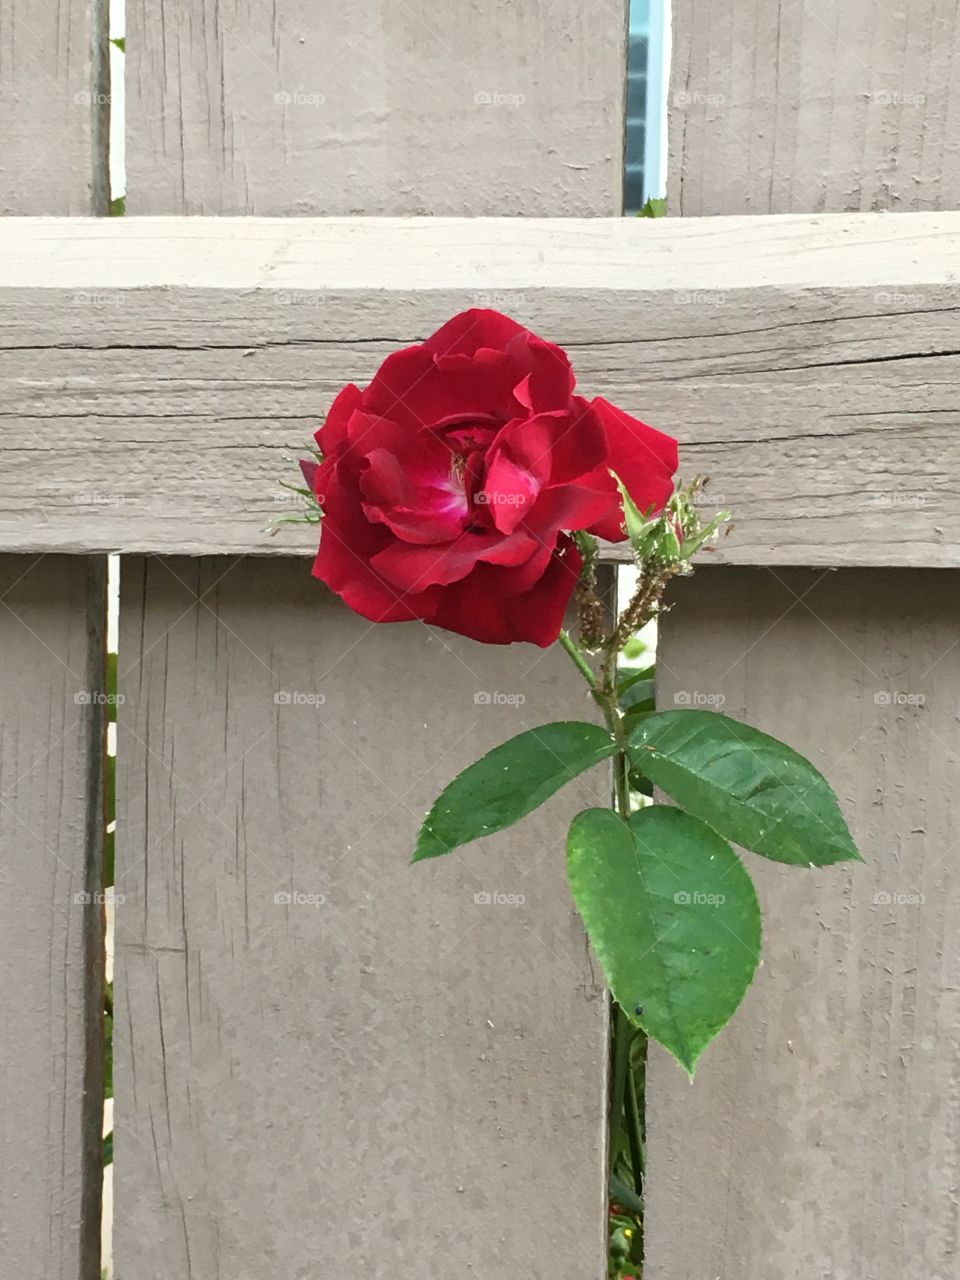 Rose growing through the crack